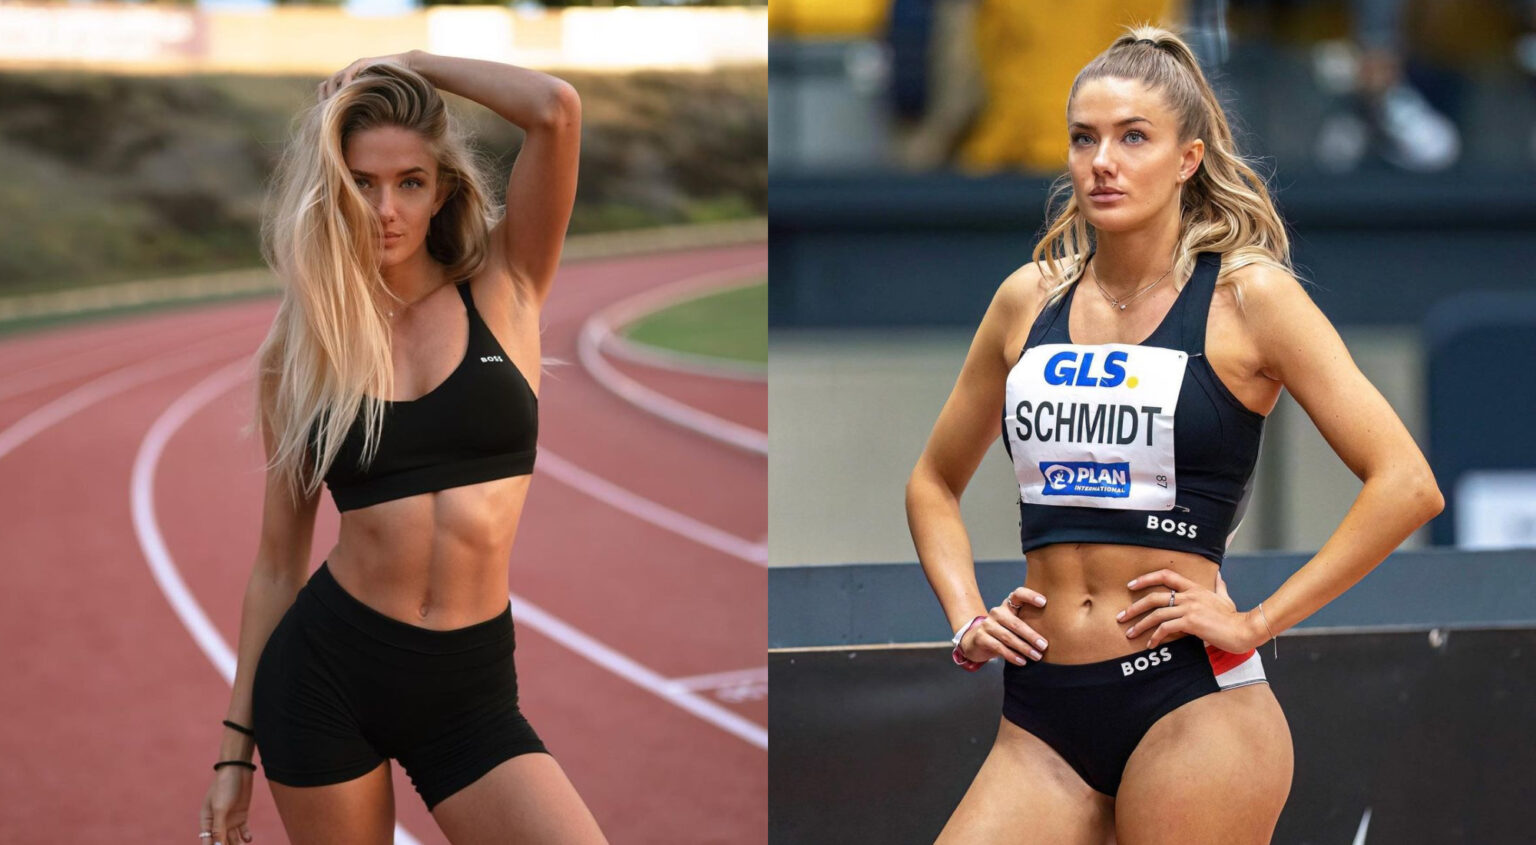 German Sprinter Alica Schmidt Warmup Video Going Viral